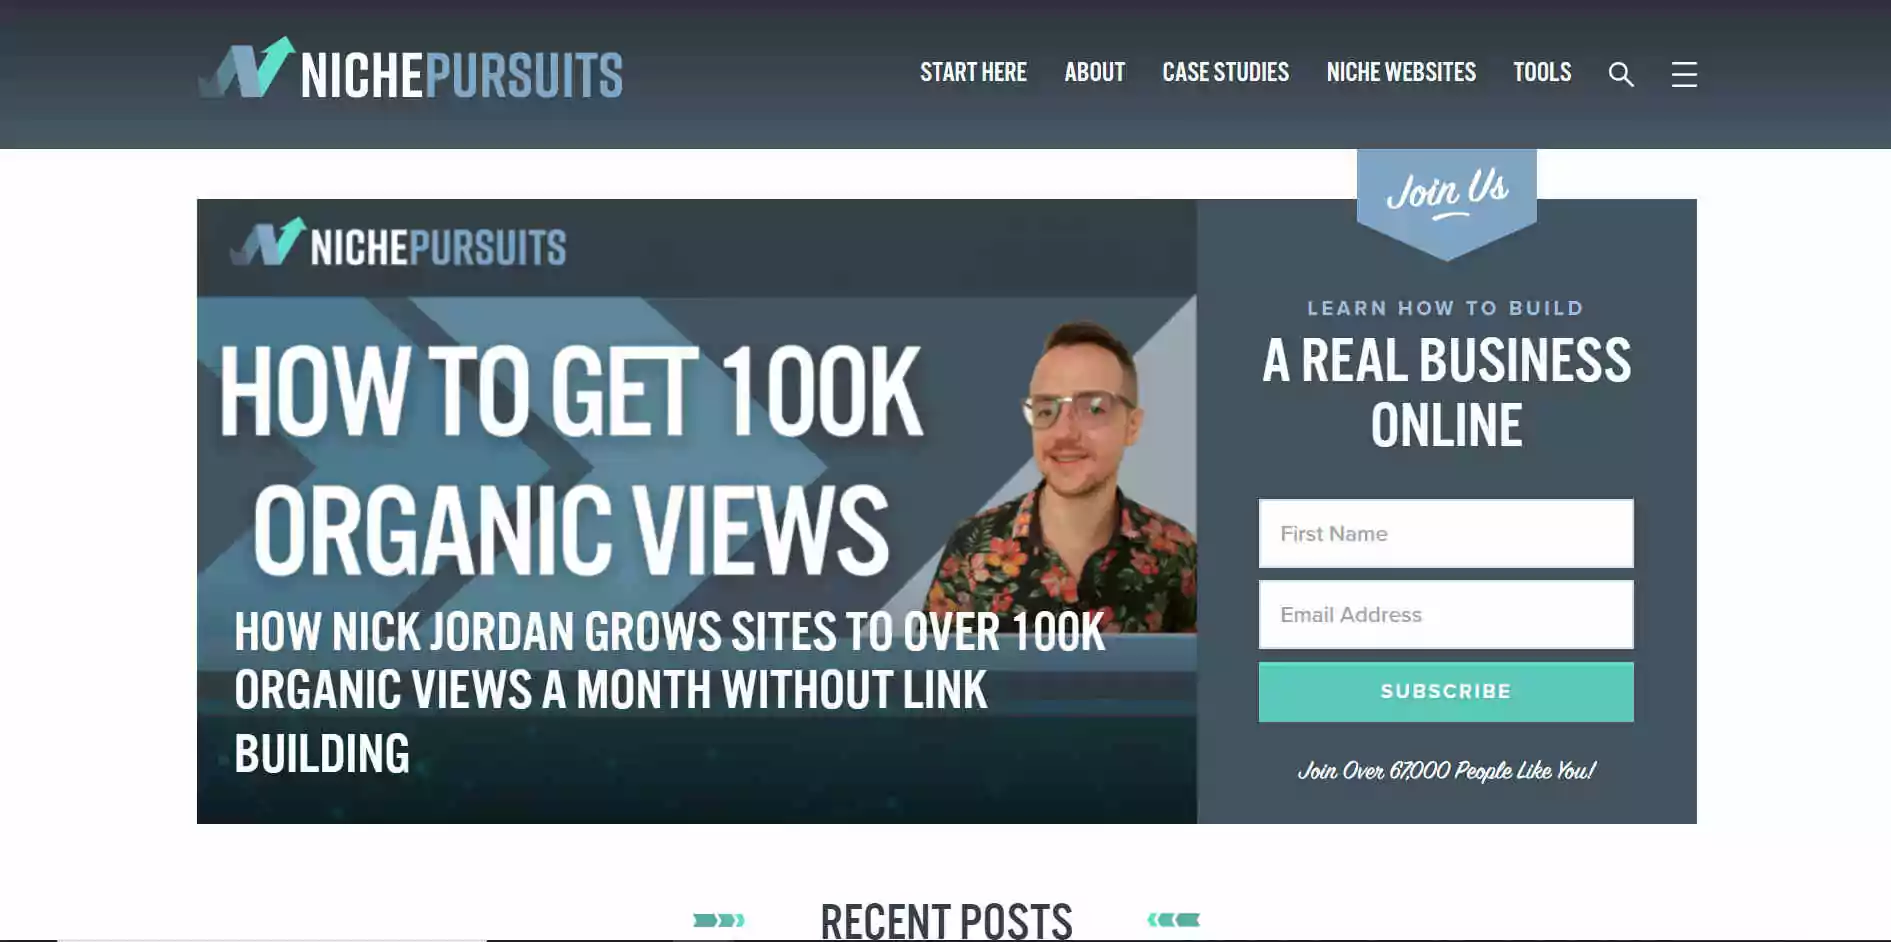 niche-pursuits-homepage